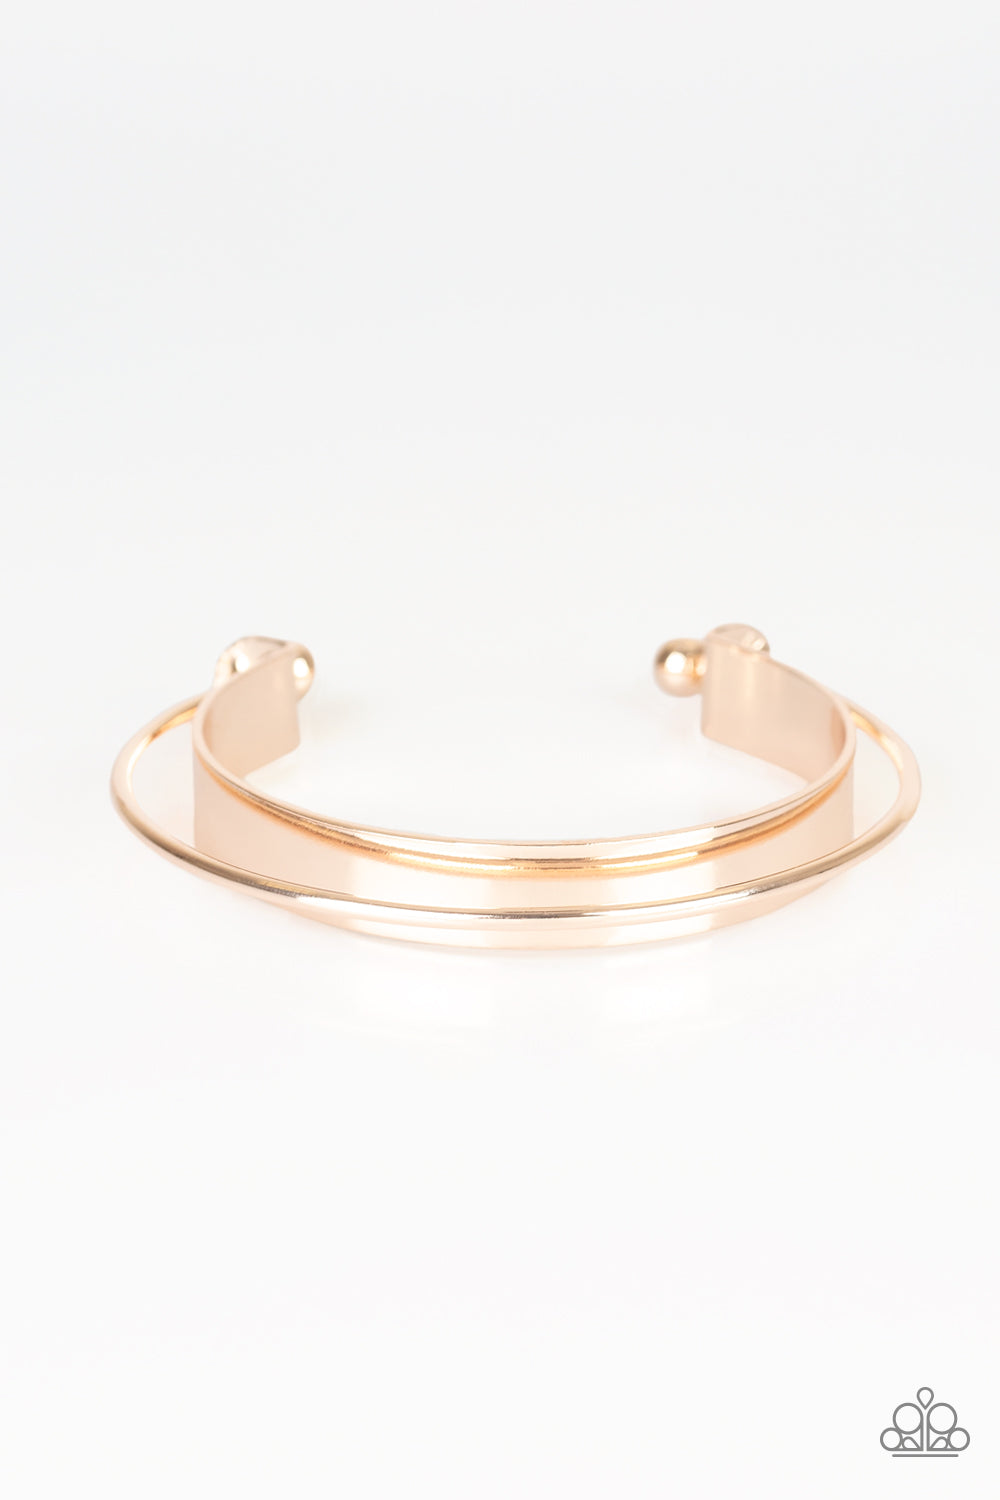 Avant-MOD Rose Gold Cuff Bracelet - Paparazzi Accessories